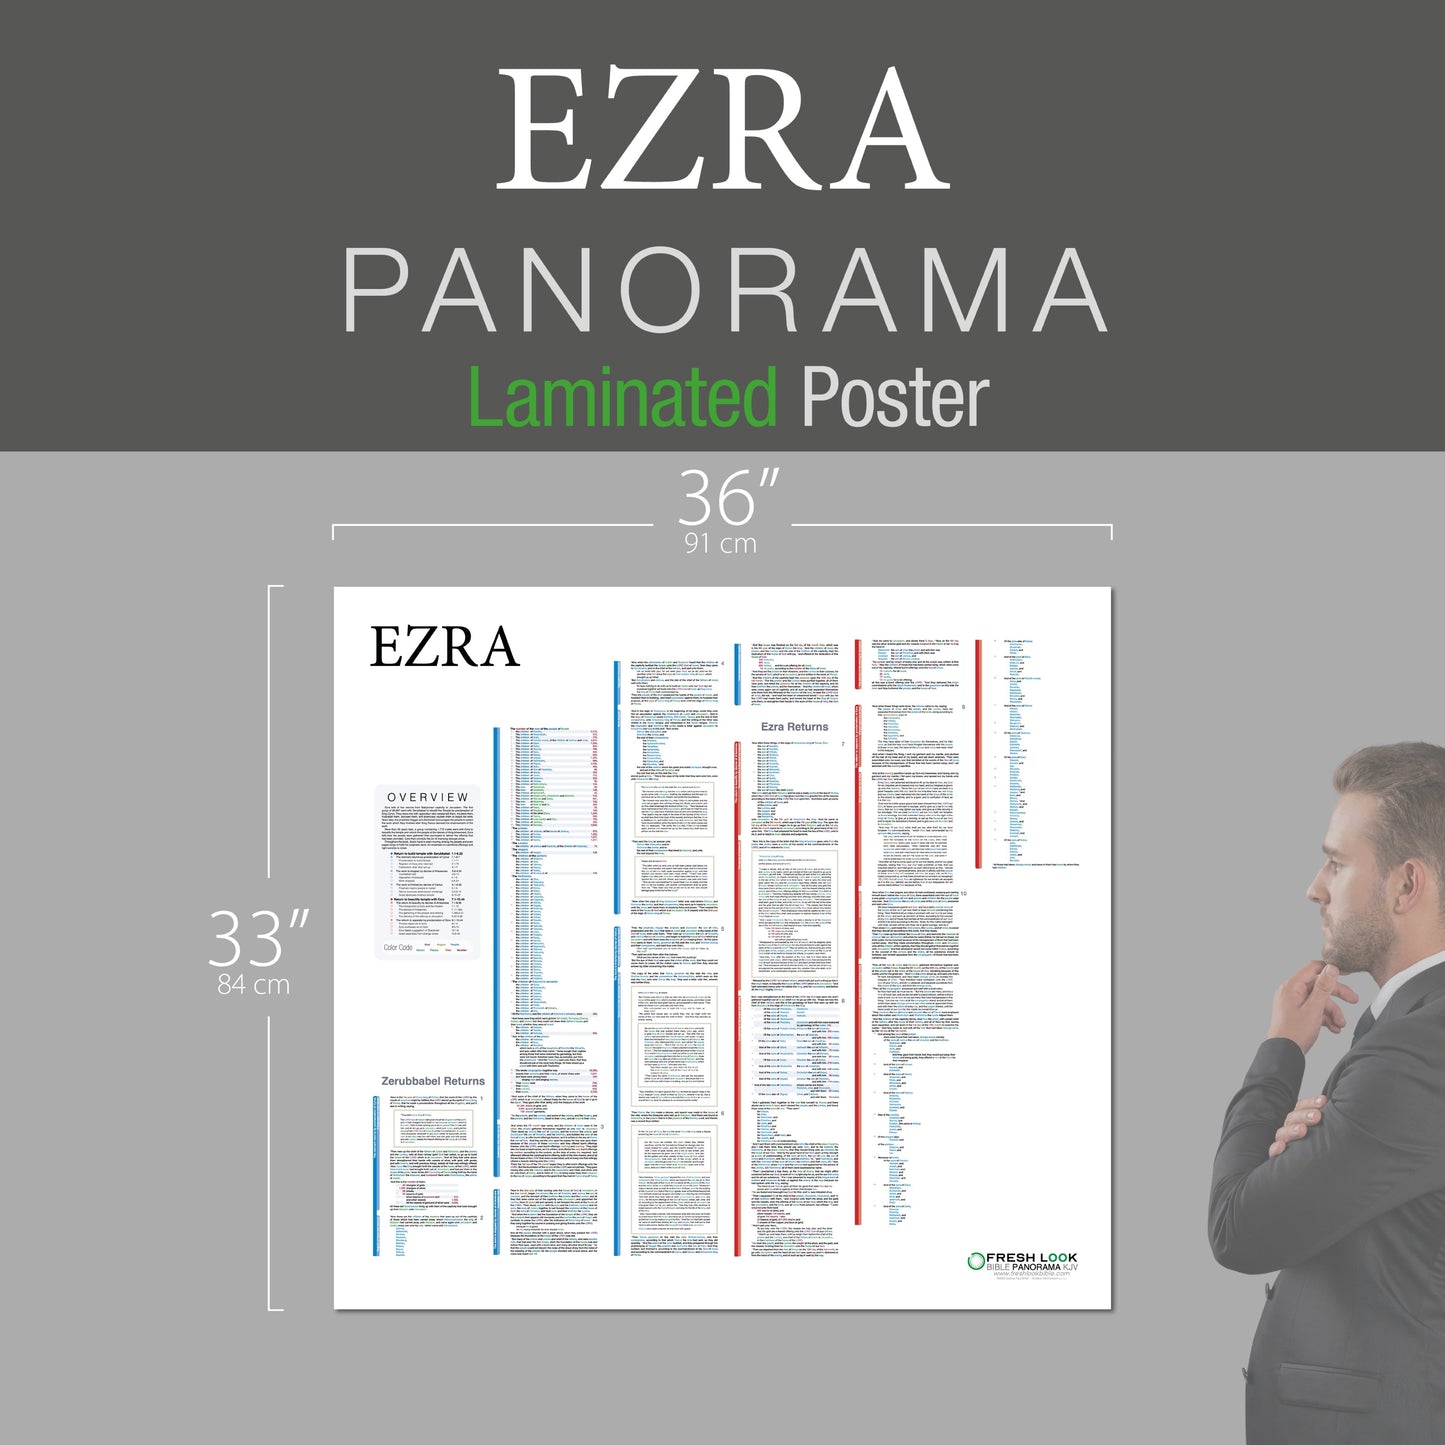 Ezra Panorama Laminated